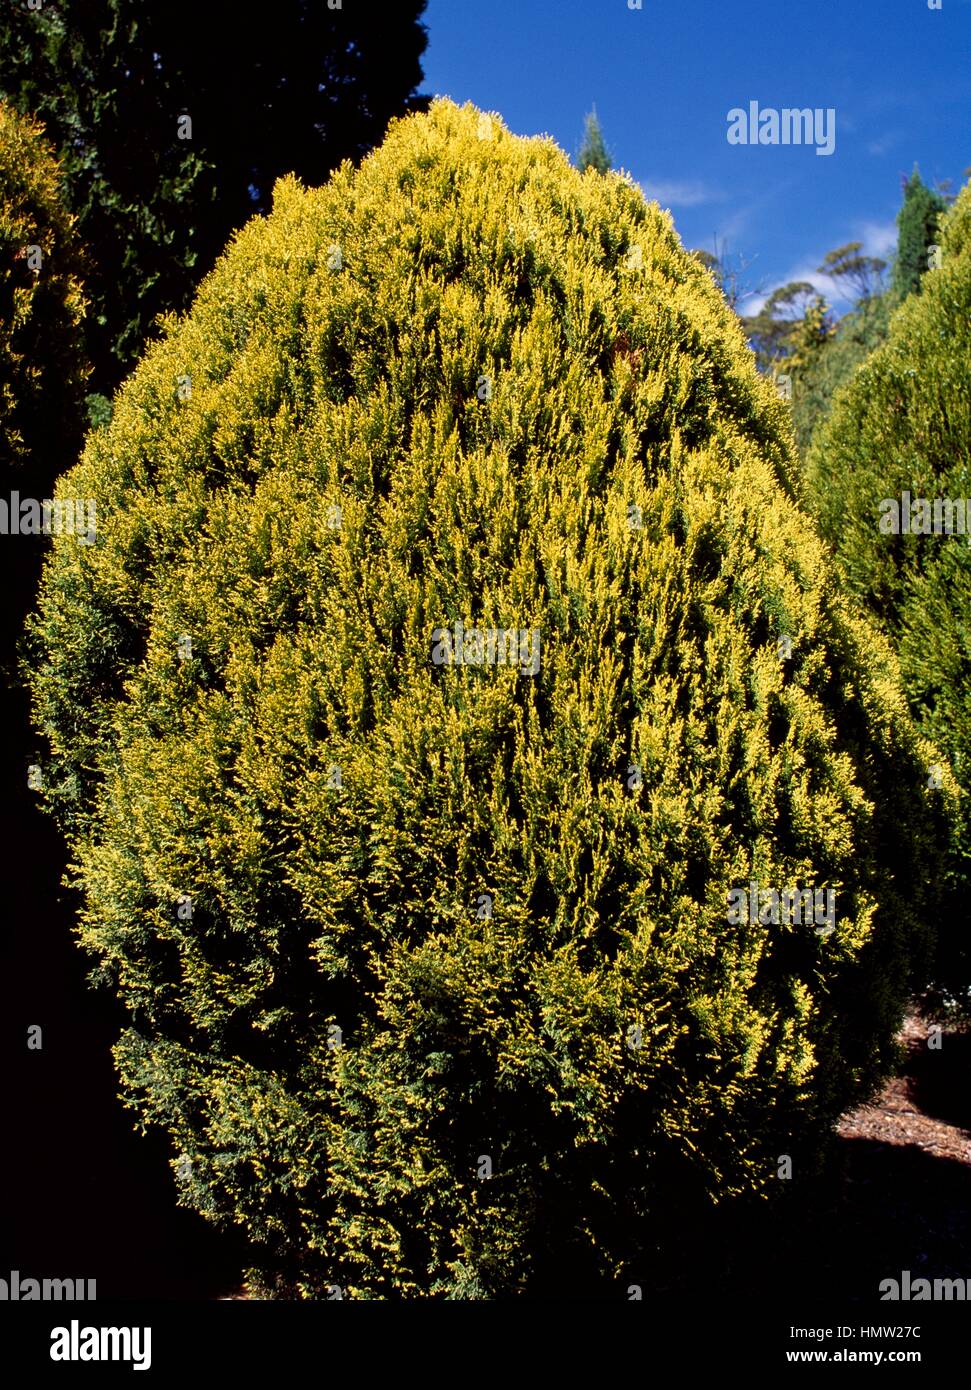 Dwarf Golden Oriental Thuja (Platycladus orientalis Aurea Nana), Cupressaceae. Stock Photo